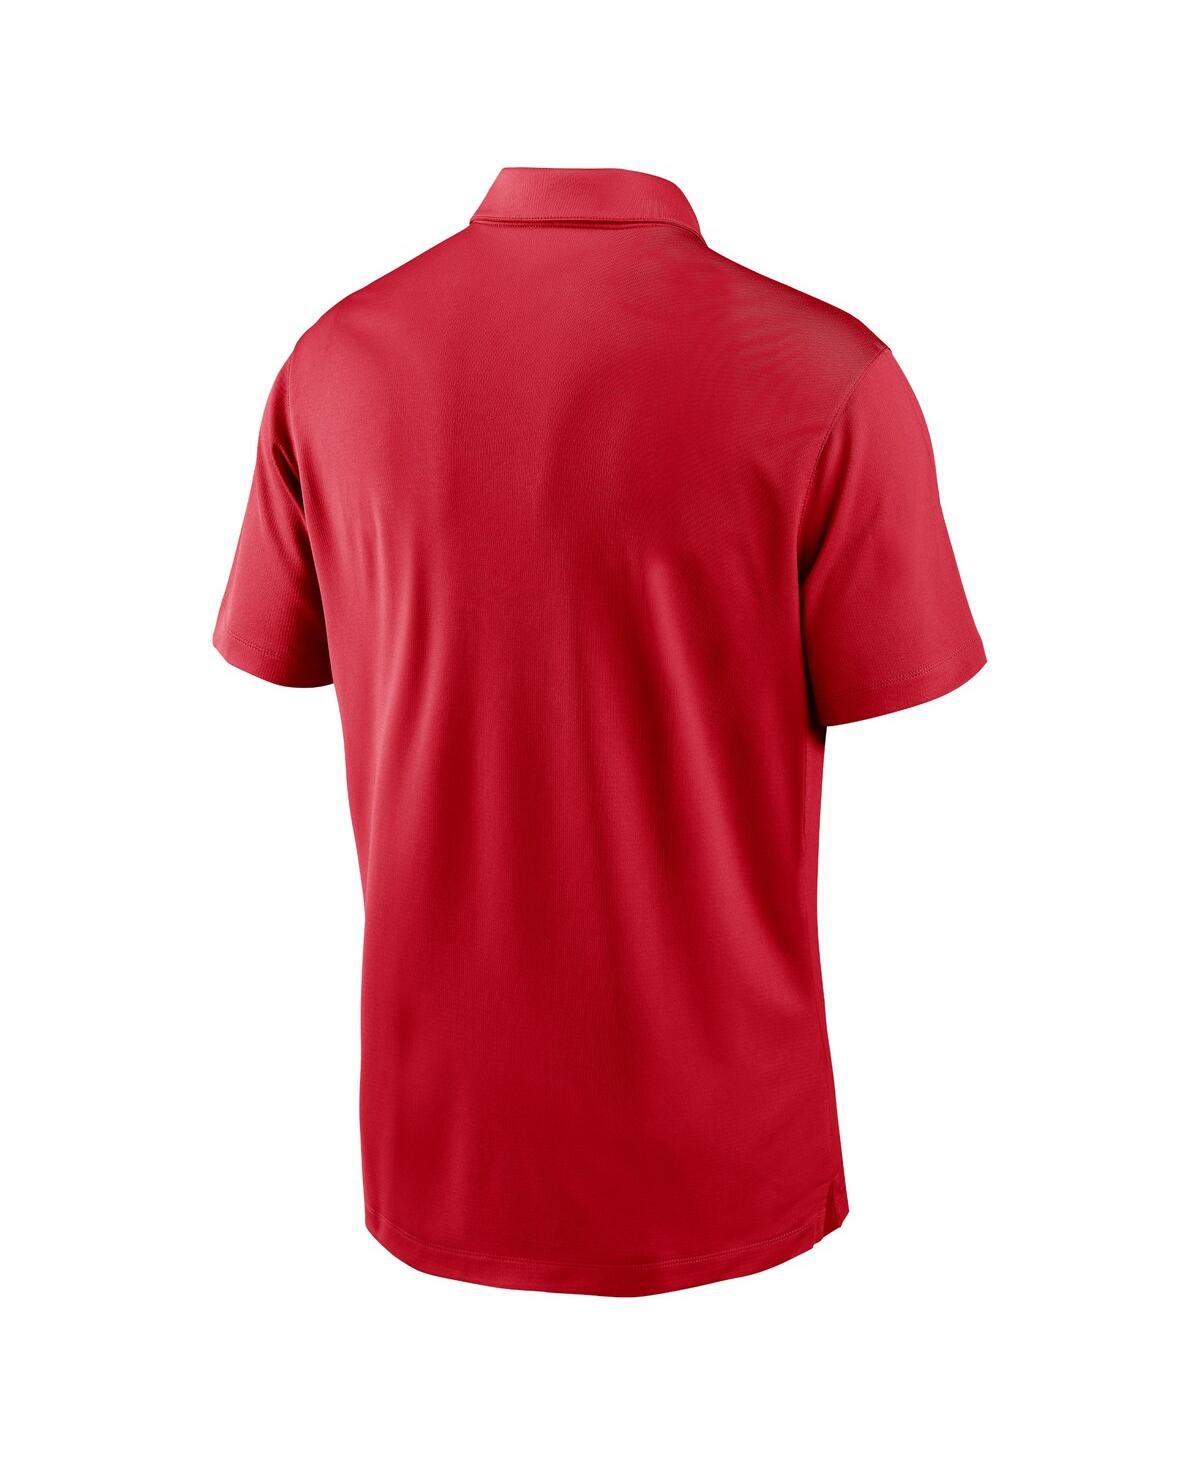 Shop Nike Men's  Red Los Angeles Angels Diamond Icon Franchise Performance Polo Shirt